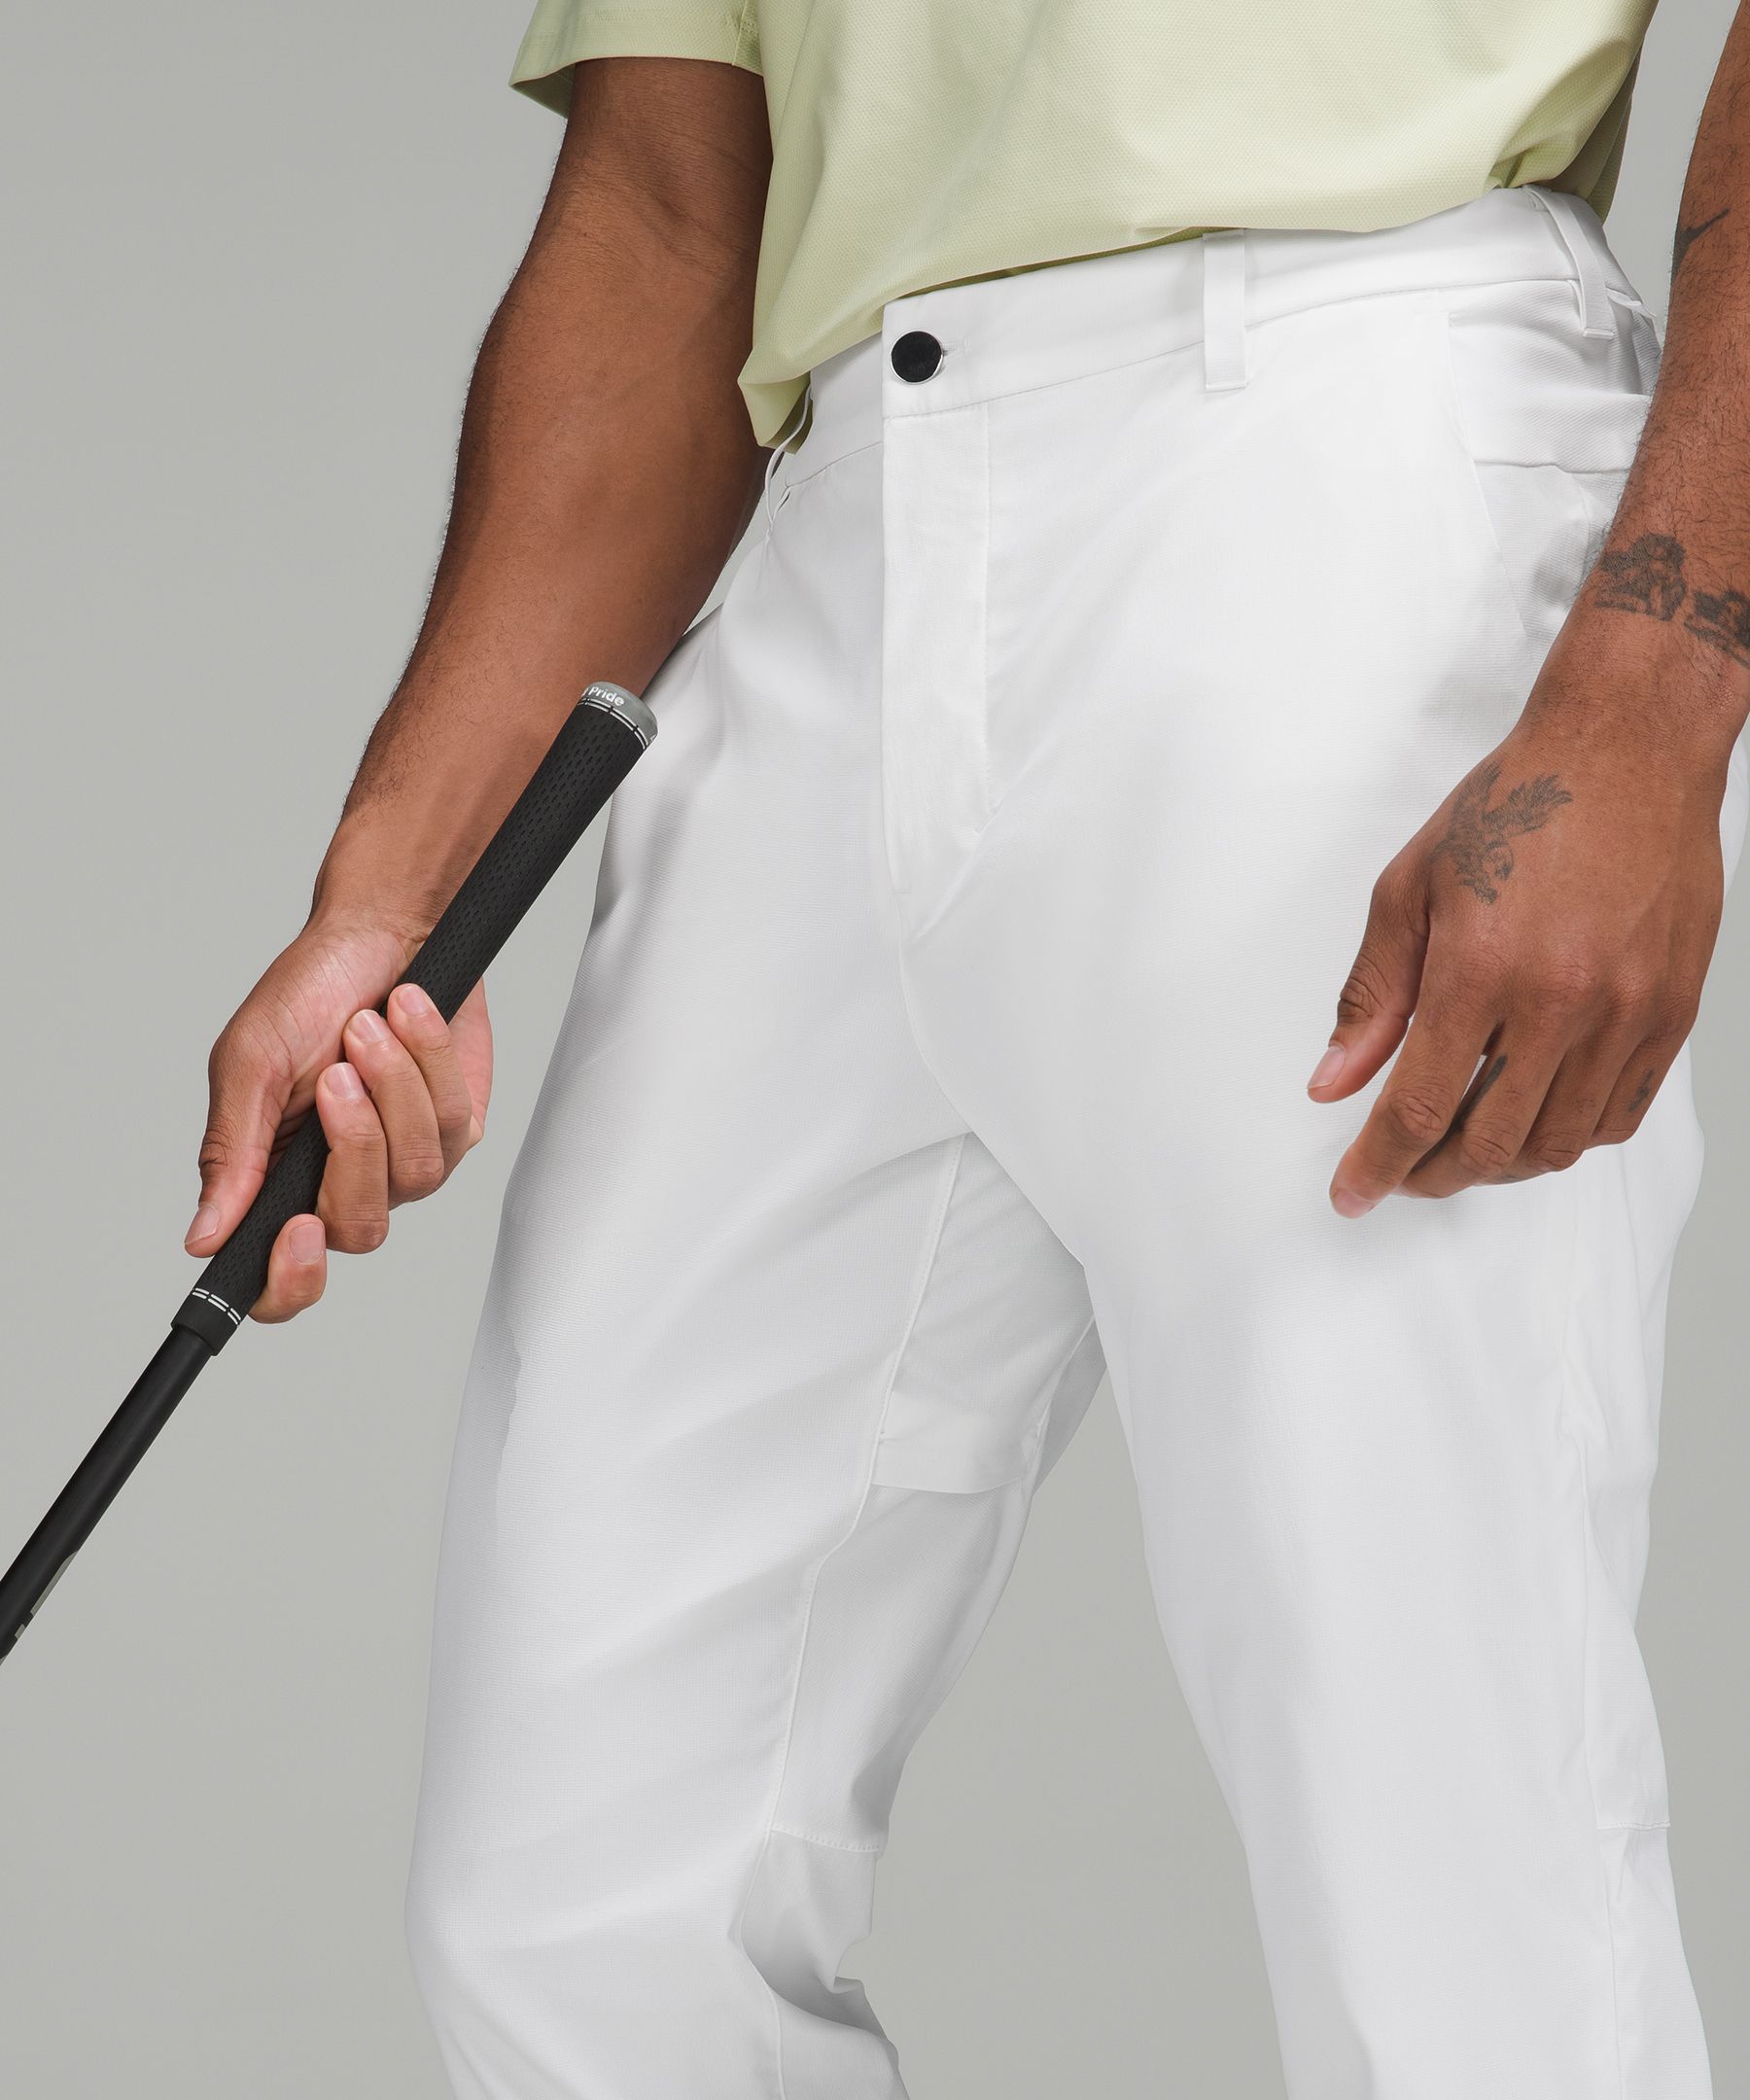 Lululemon Stretch High-Rise Pant, Golf Equipment: Clubs, Balls, Bags